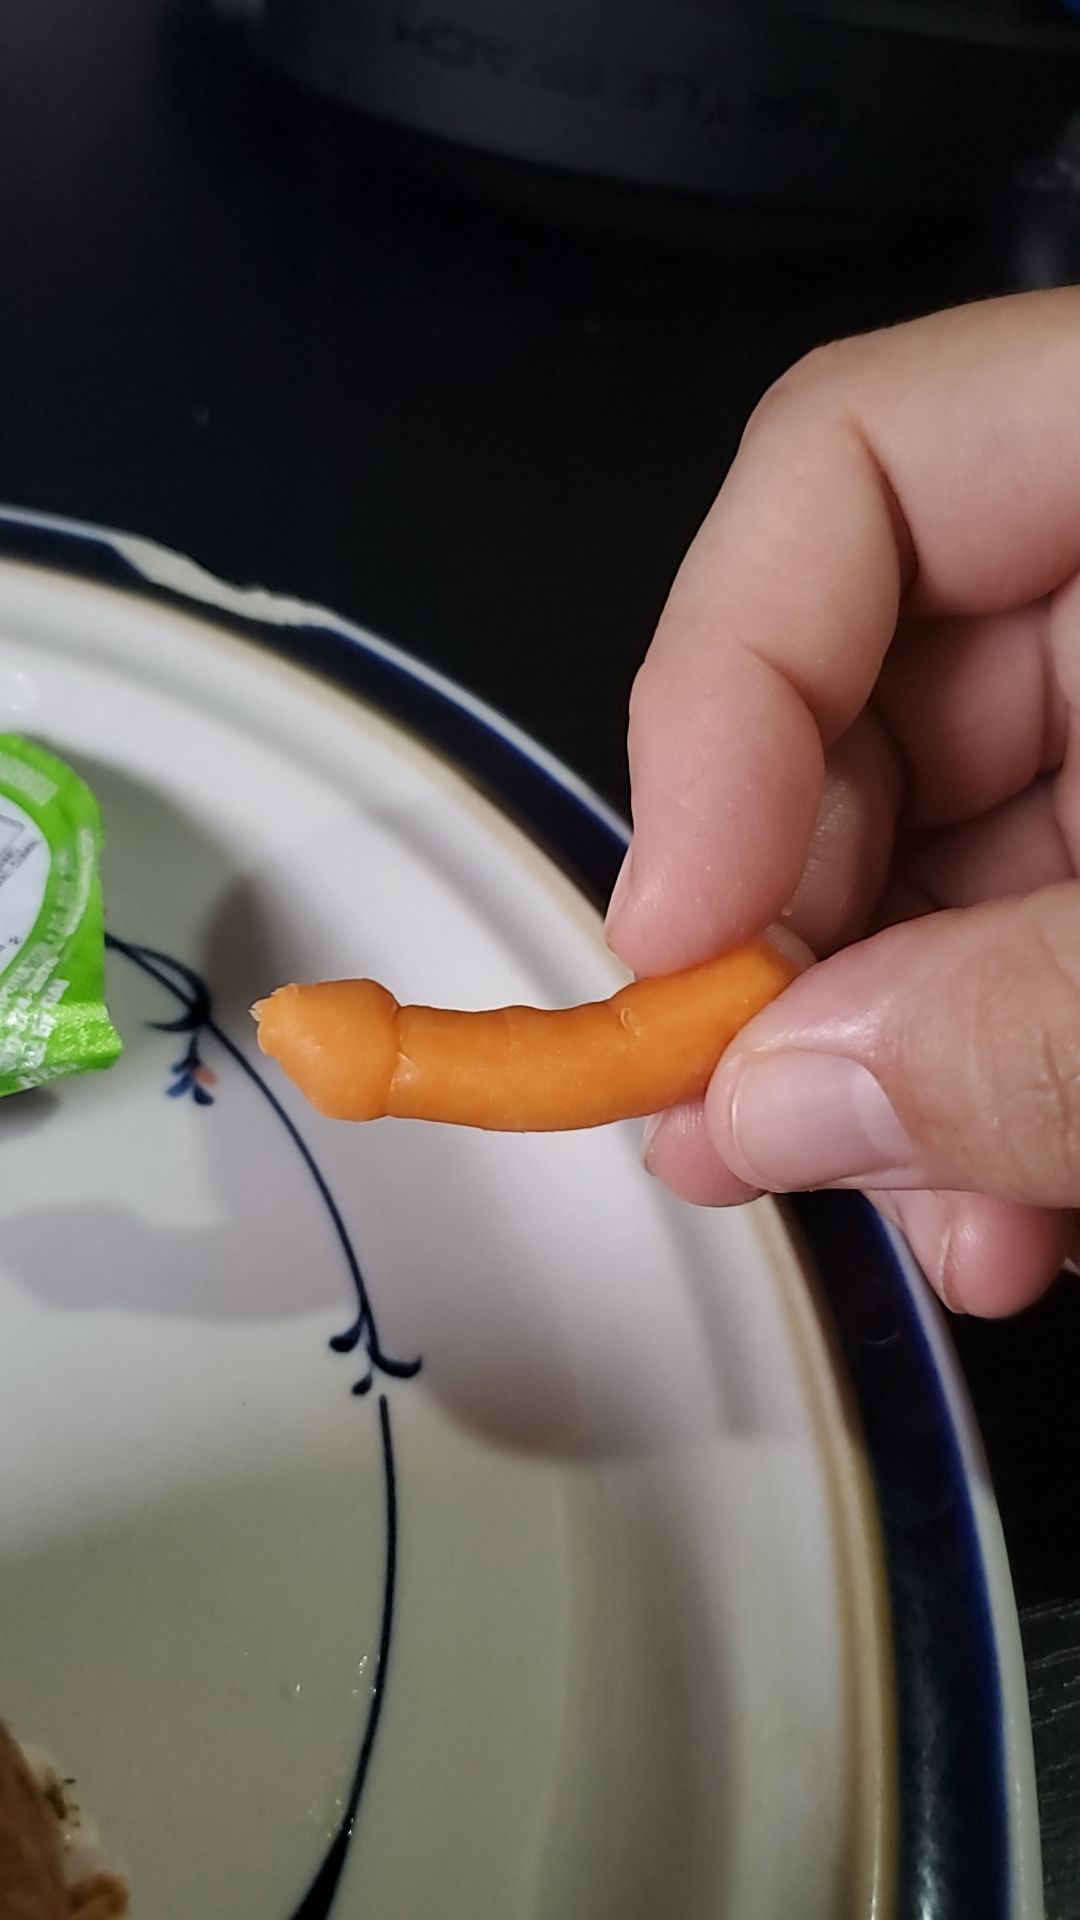 lol a tiny micro carrot.